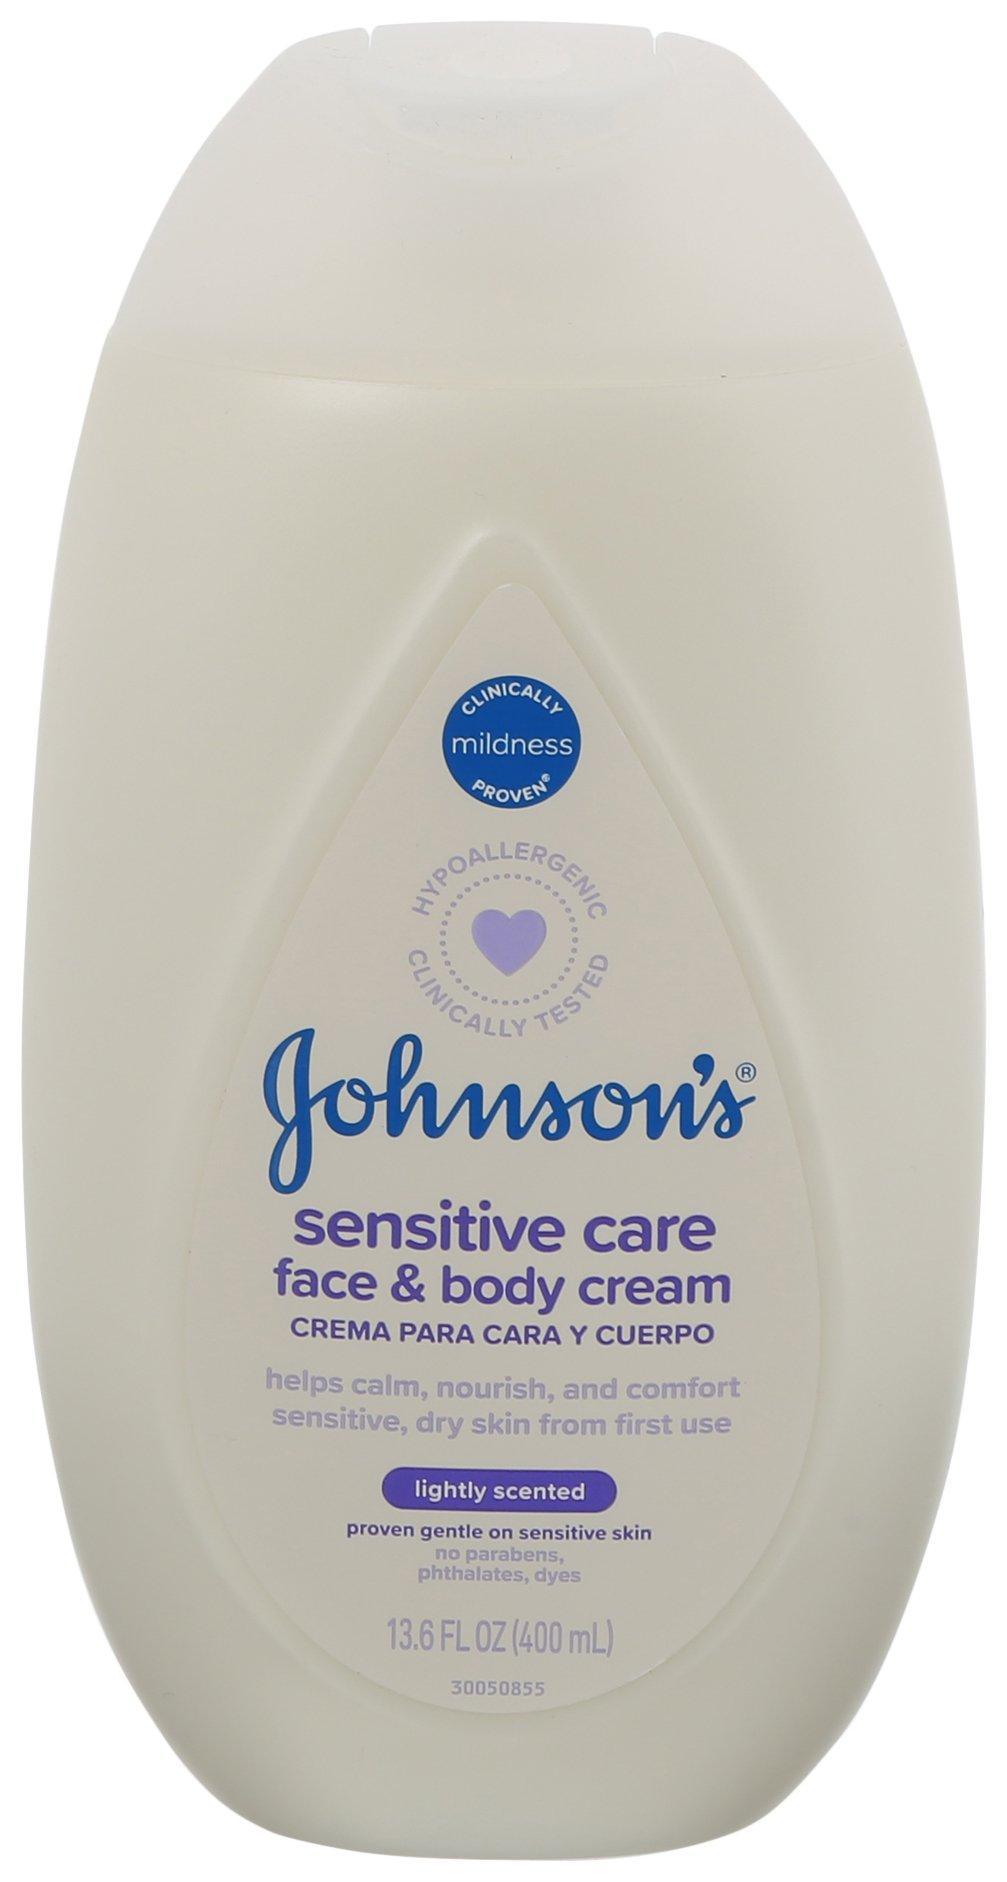 Johnson & Johnson Sensitive Care face and body cream